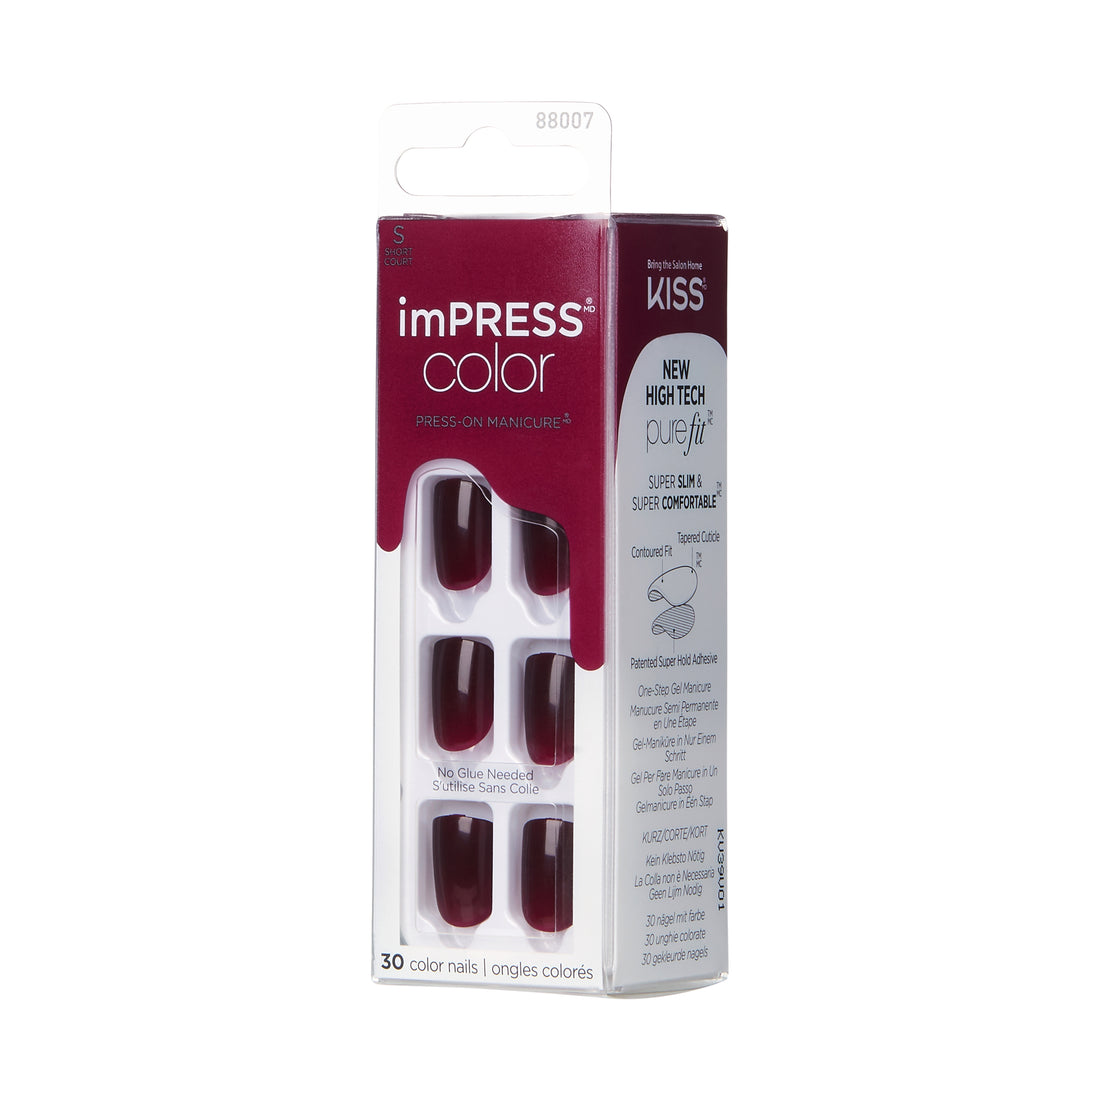 imPRESS Color Press-On Manicure - Cherry Up